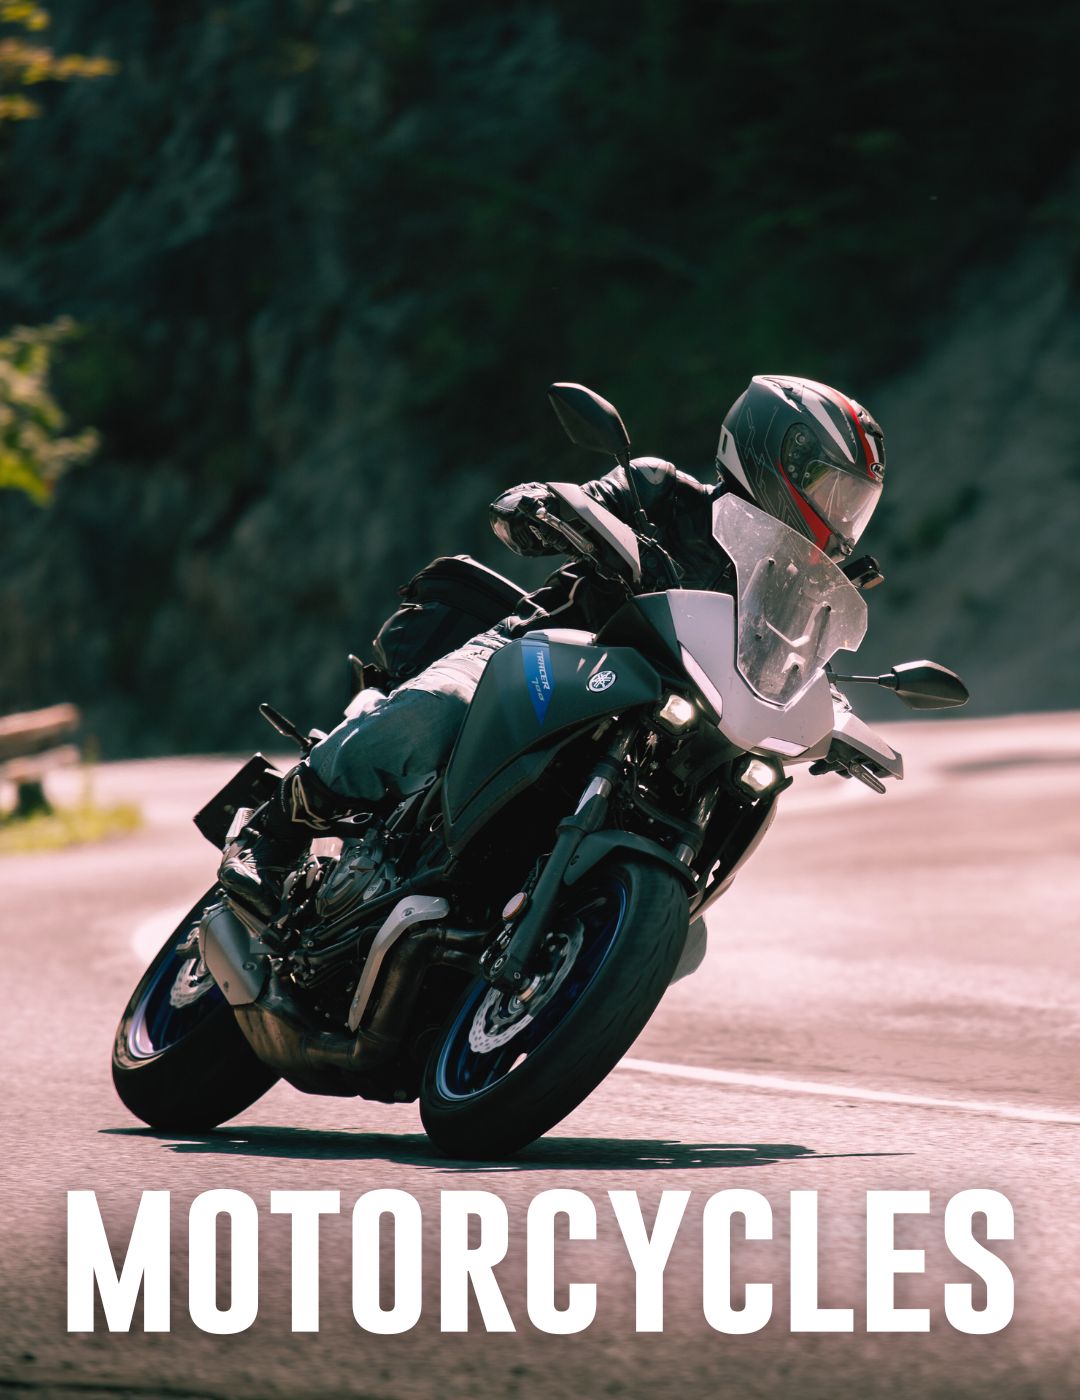 finance your motorcycle through ironhorse funding. harley davidson motorcycles, indian motorcycles, triumph motorcycle, sportster motorcycle